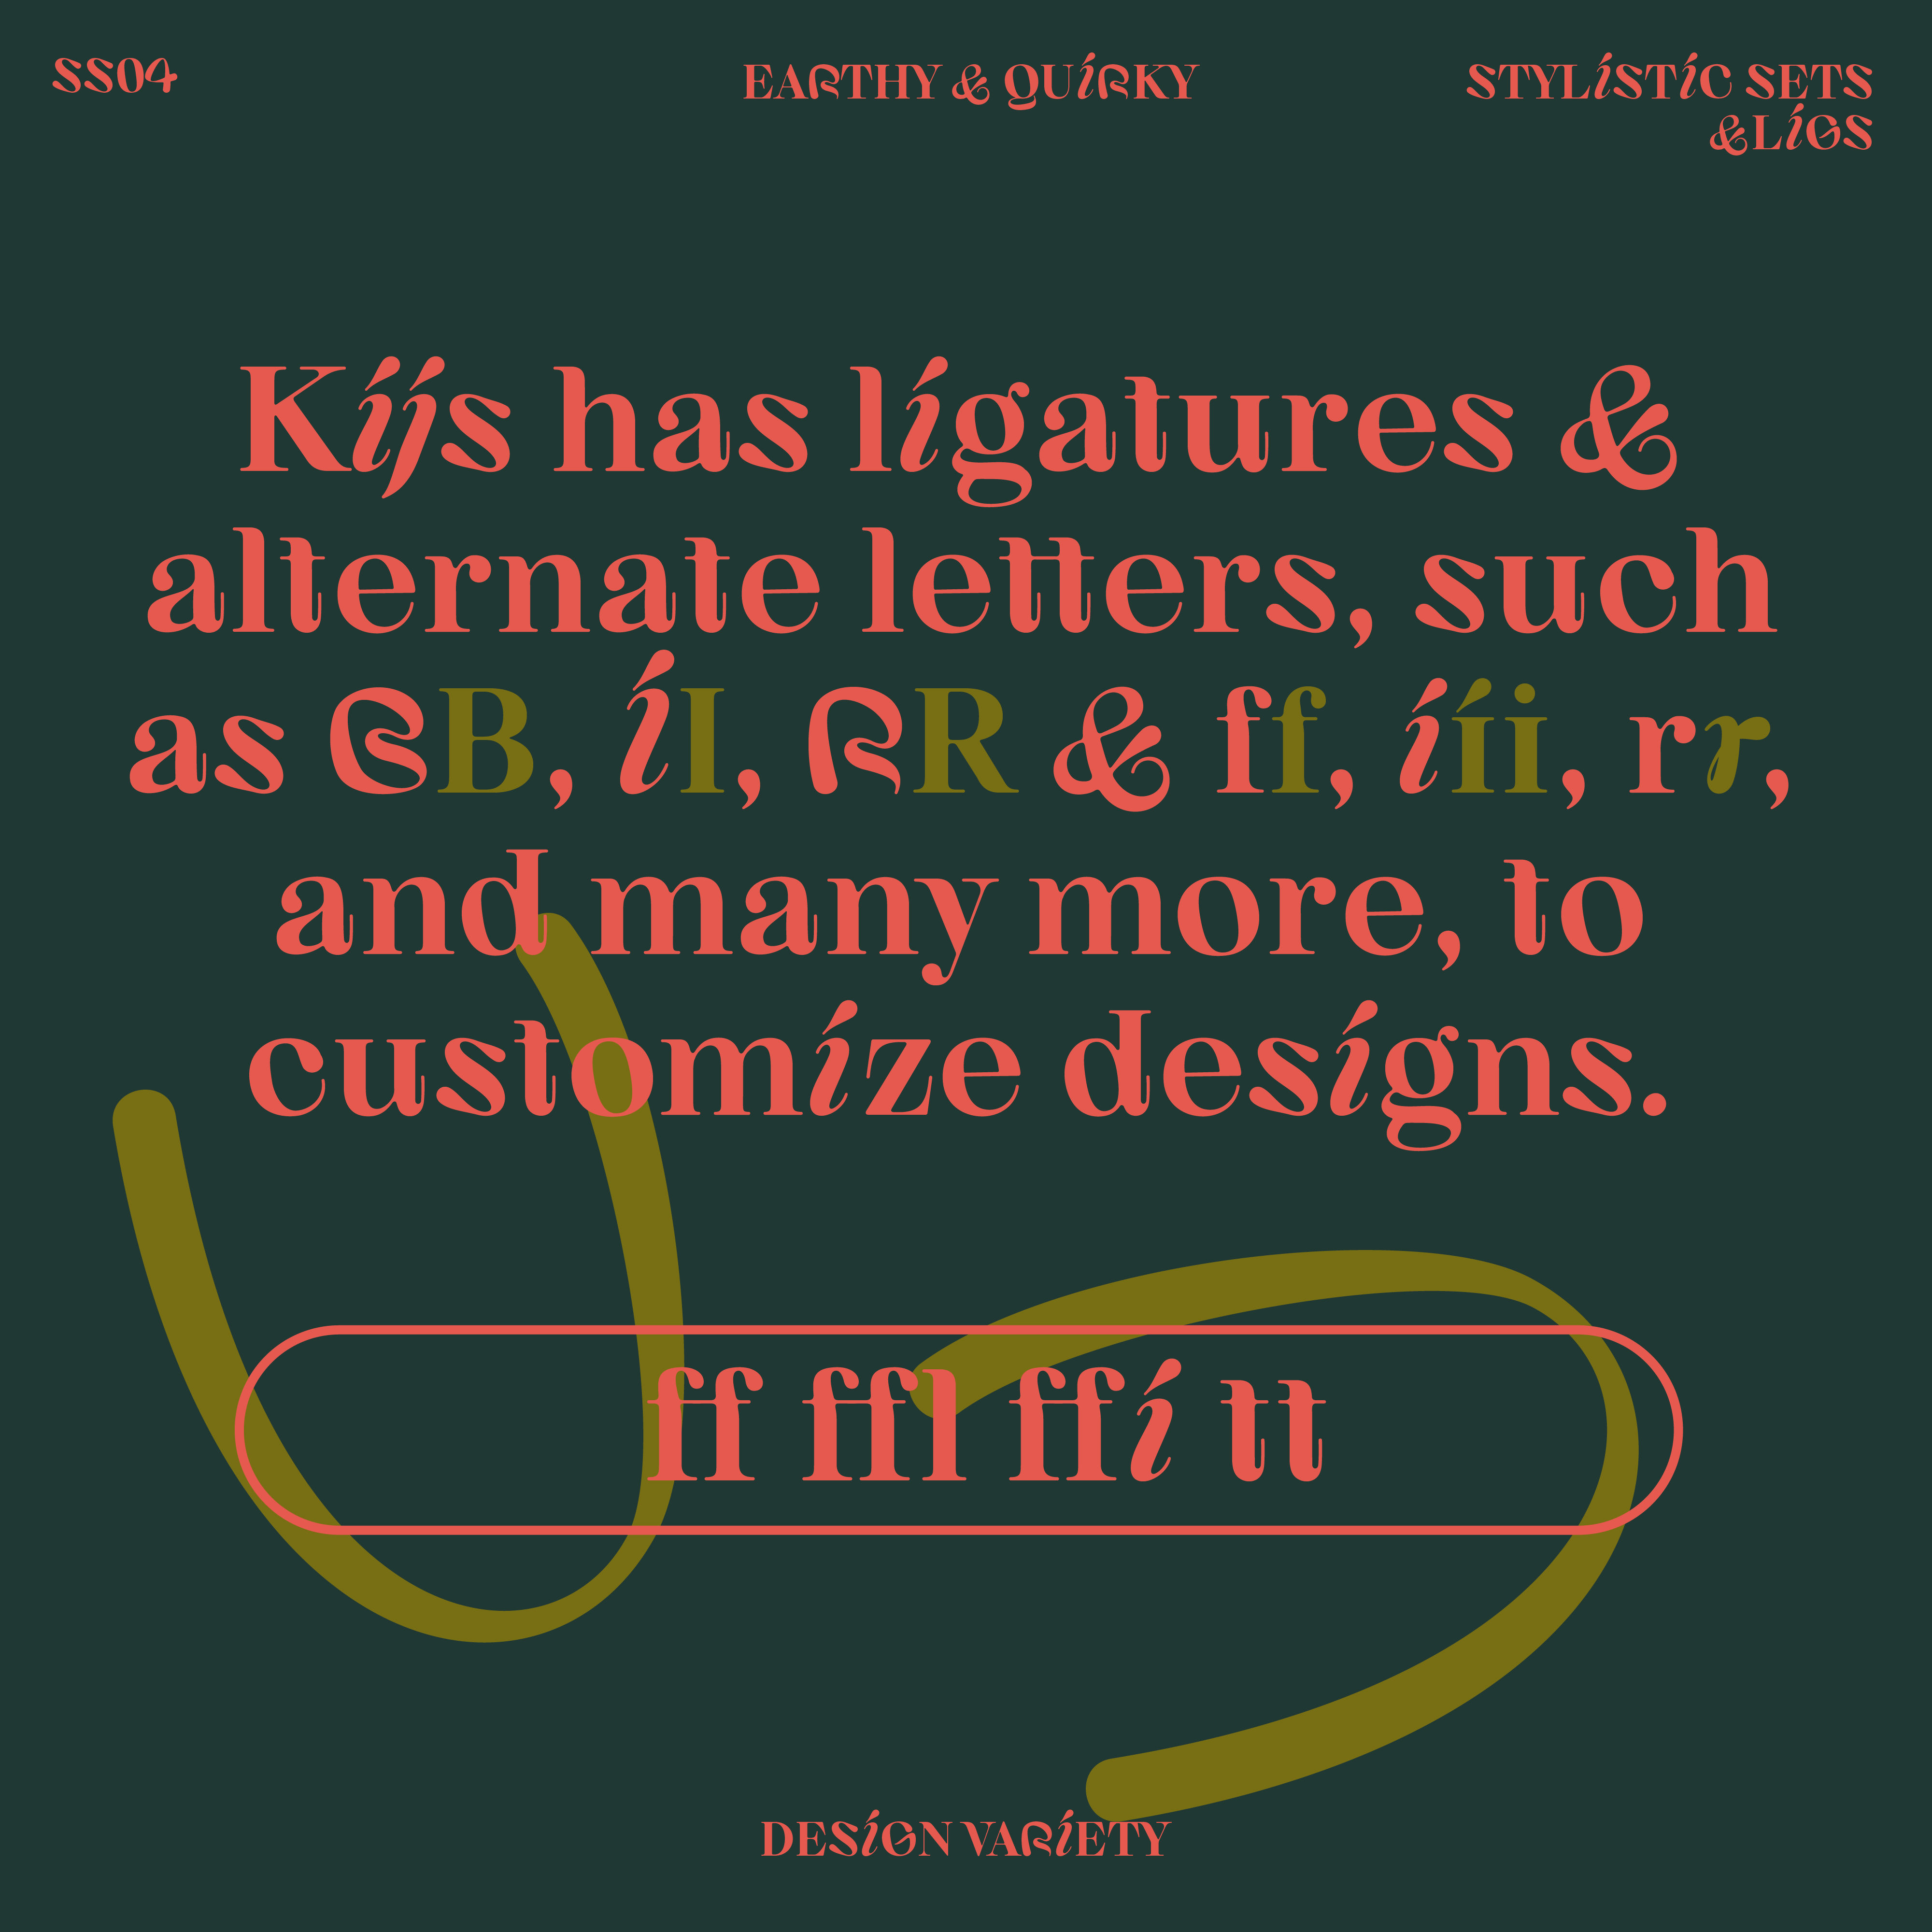 Kijs, alternate letters